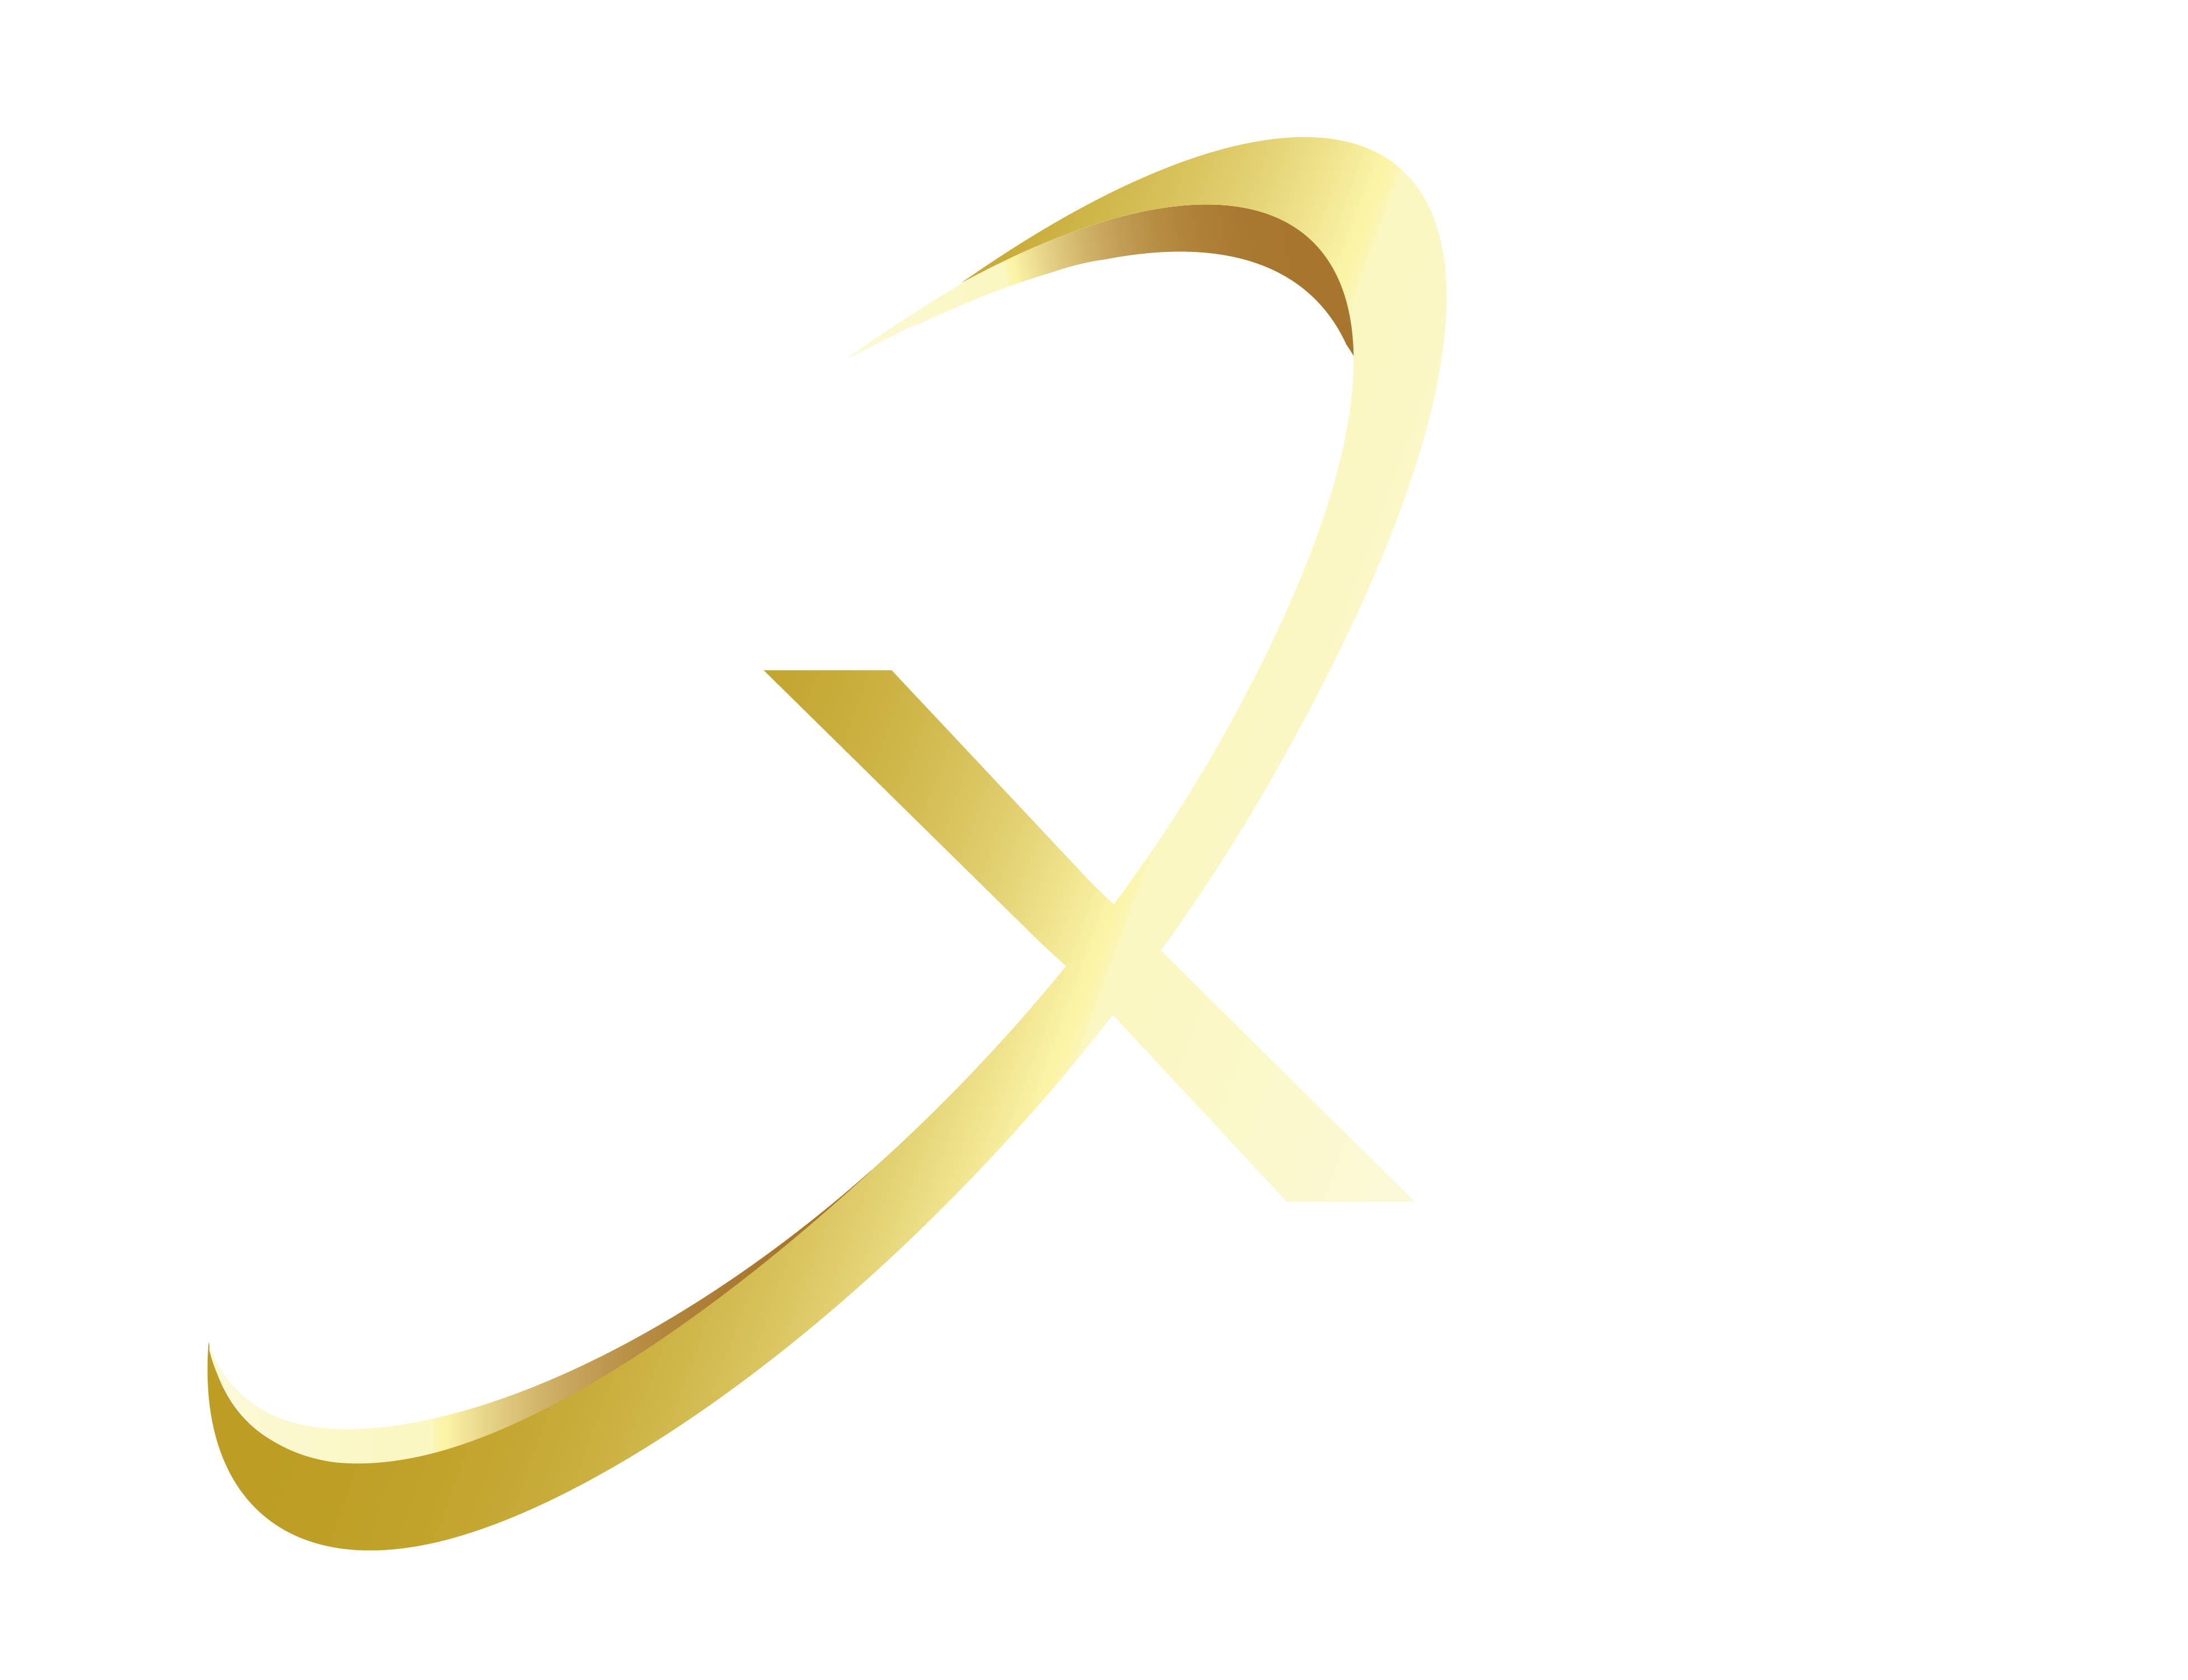 GXM